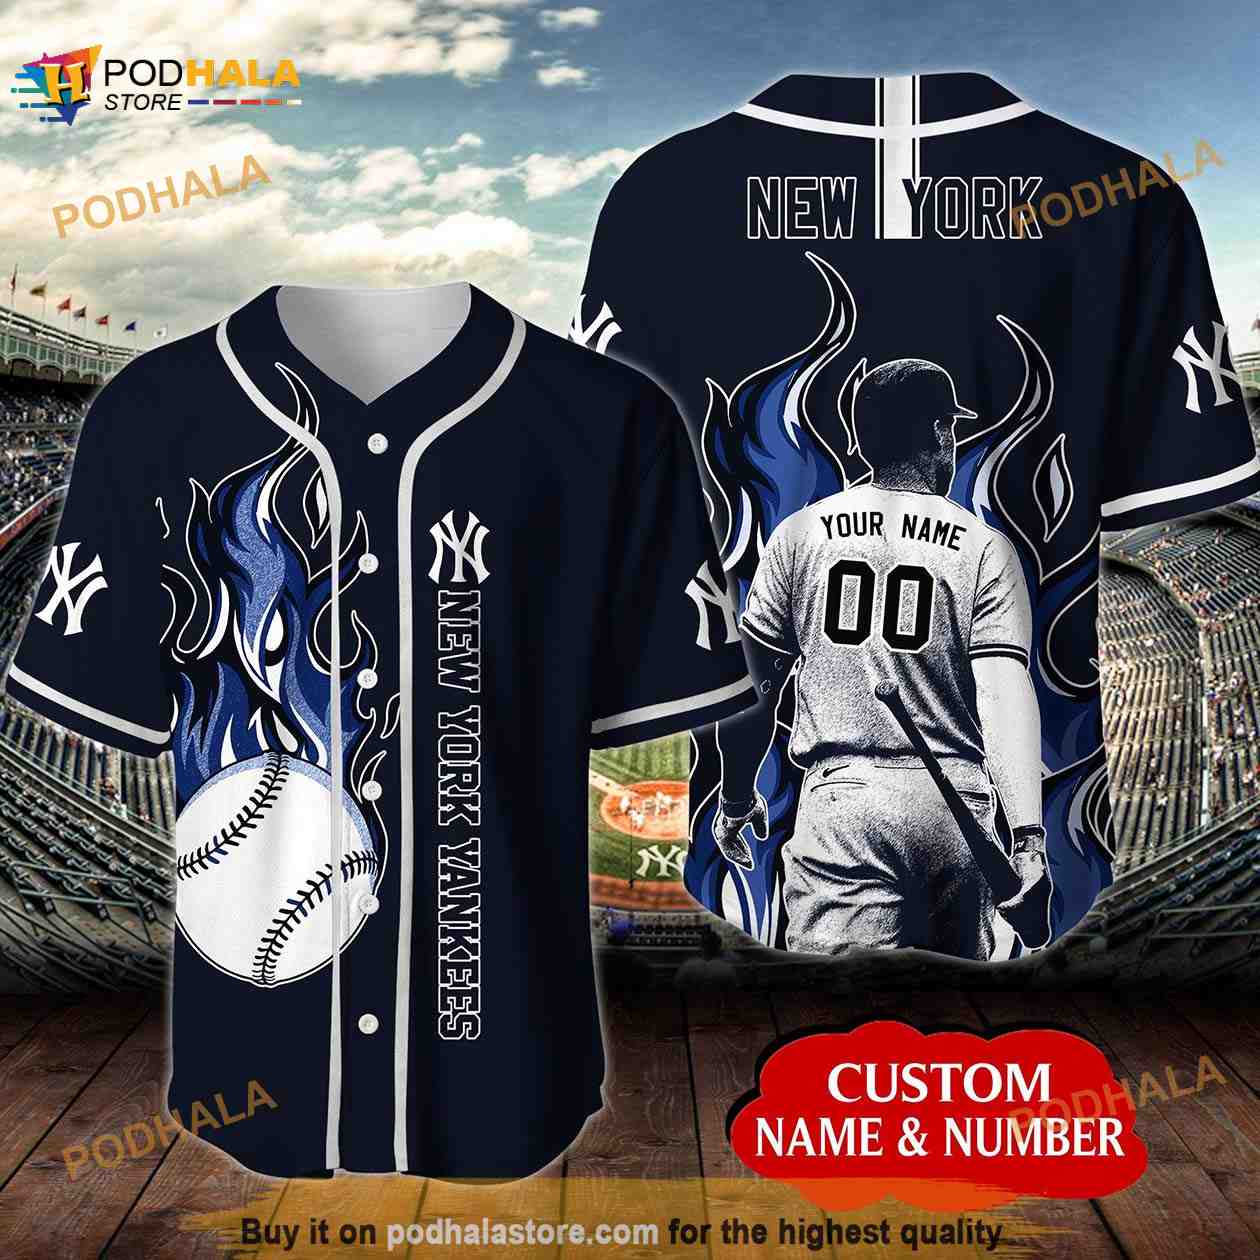 New York Yankees Jerseys, Yankees Baseball Jersey, Uniforms